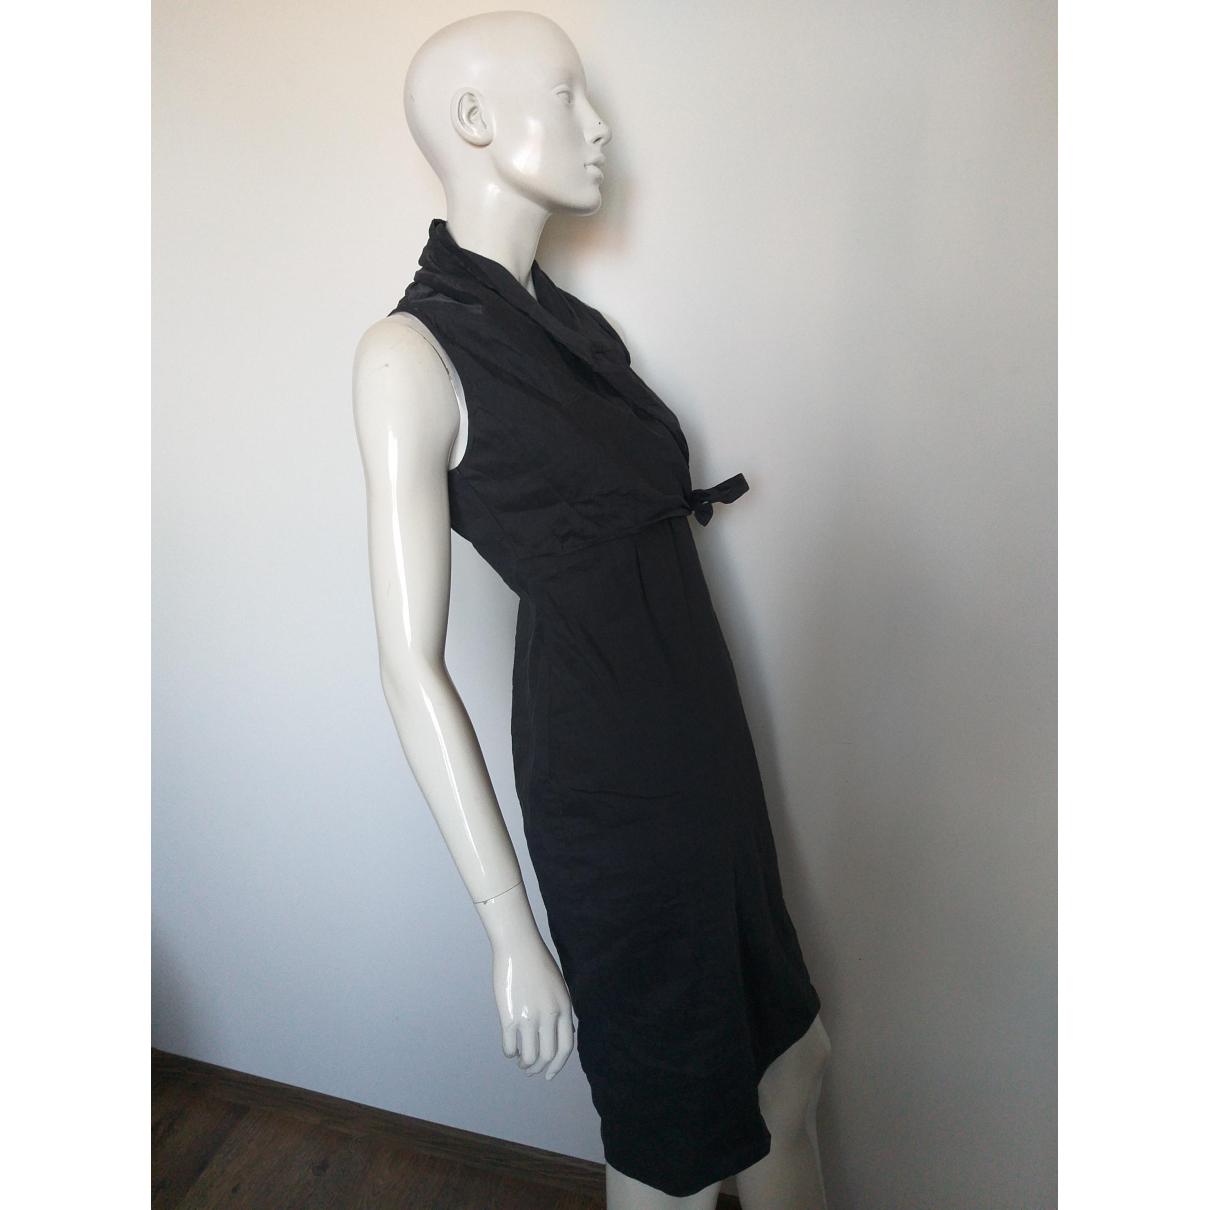 Linen mid-length dress SARAH PACINI Grey size 1 0-5 in Linen